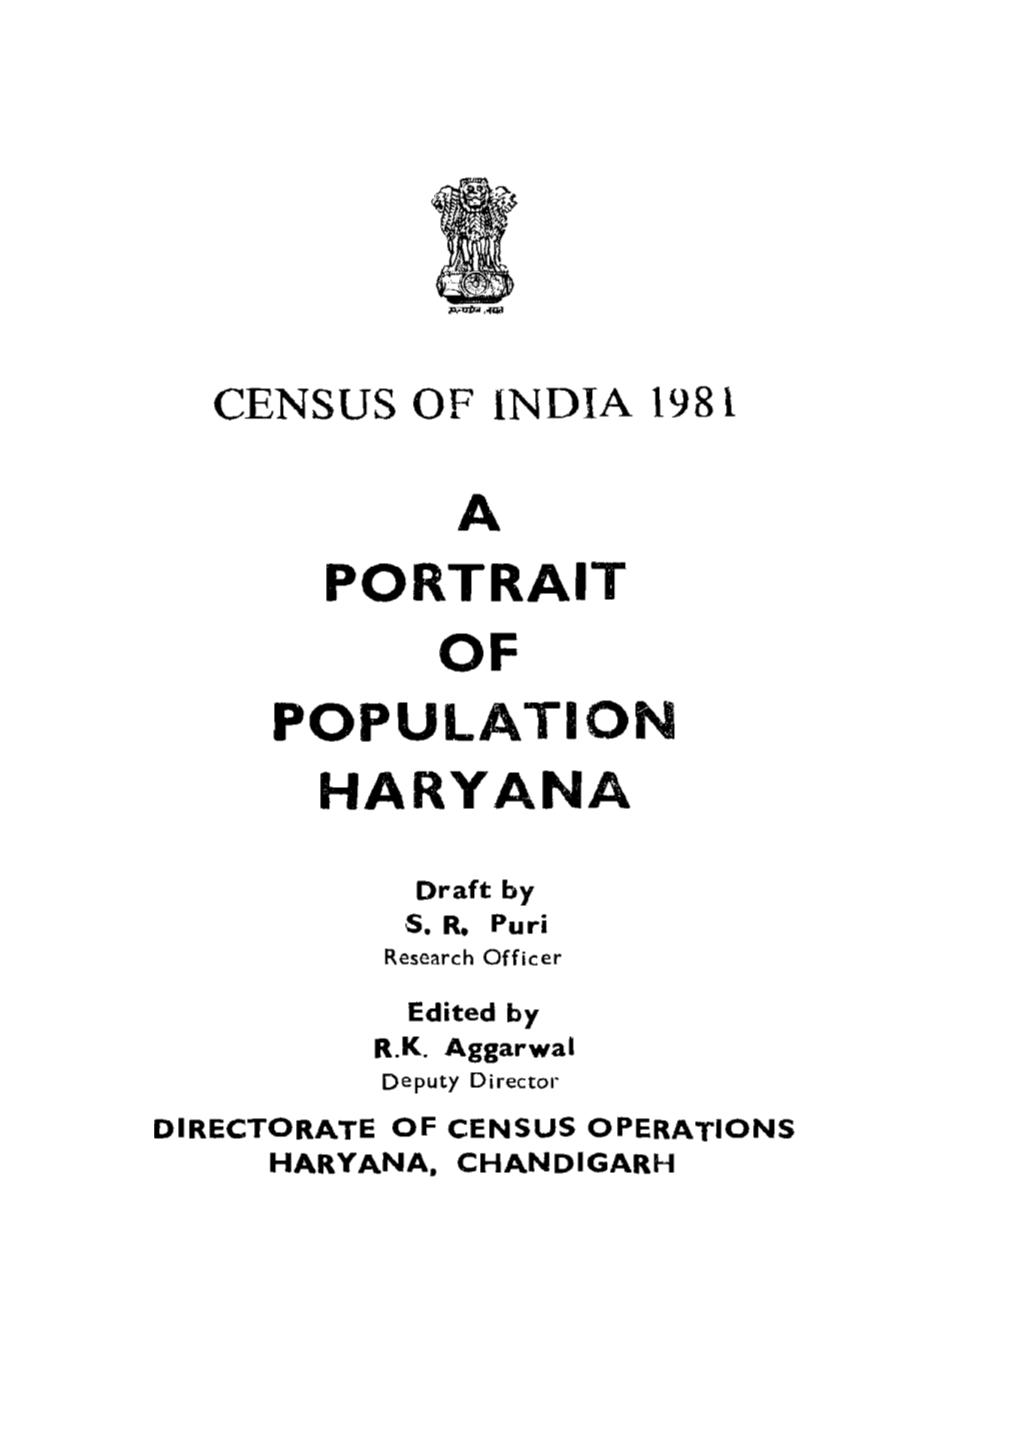 Portrait of Population Haryana